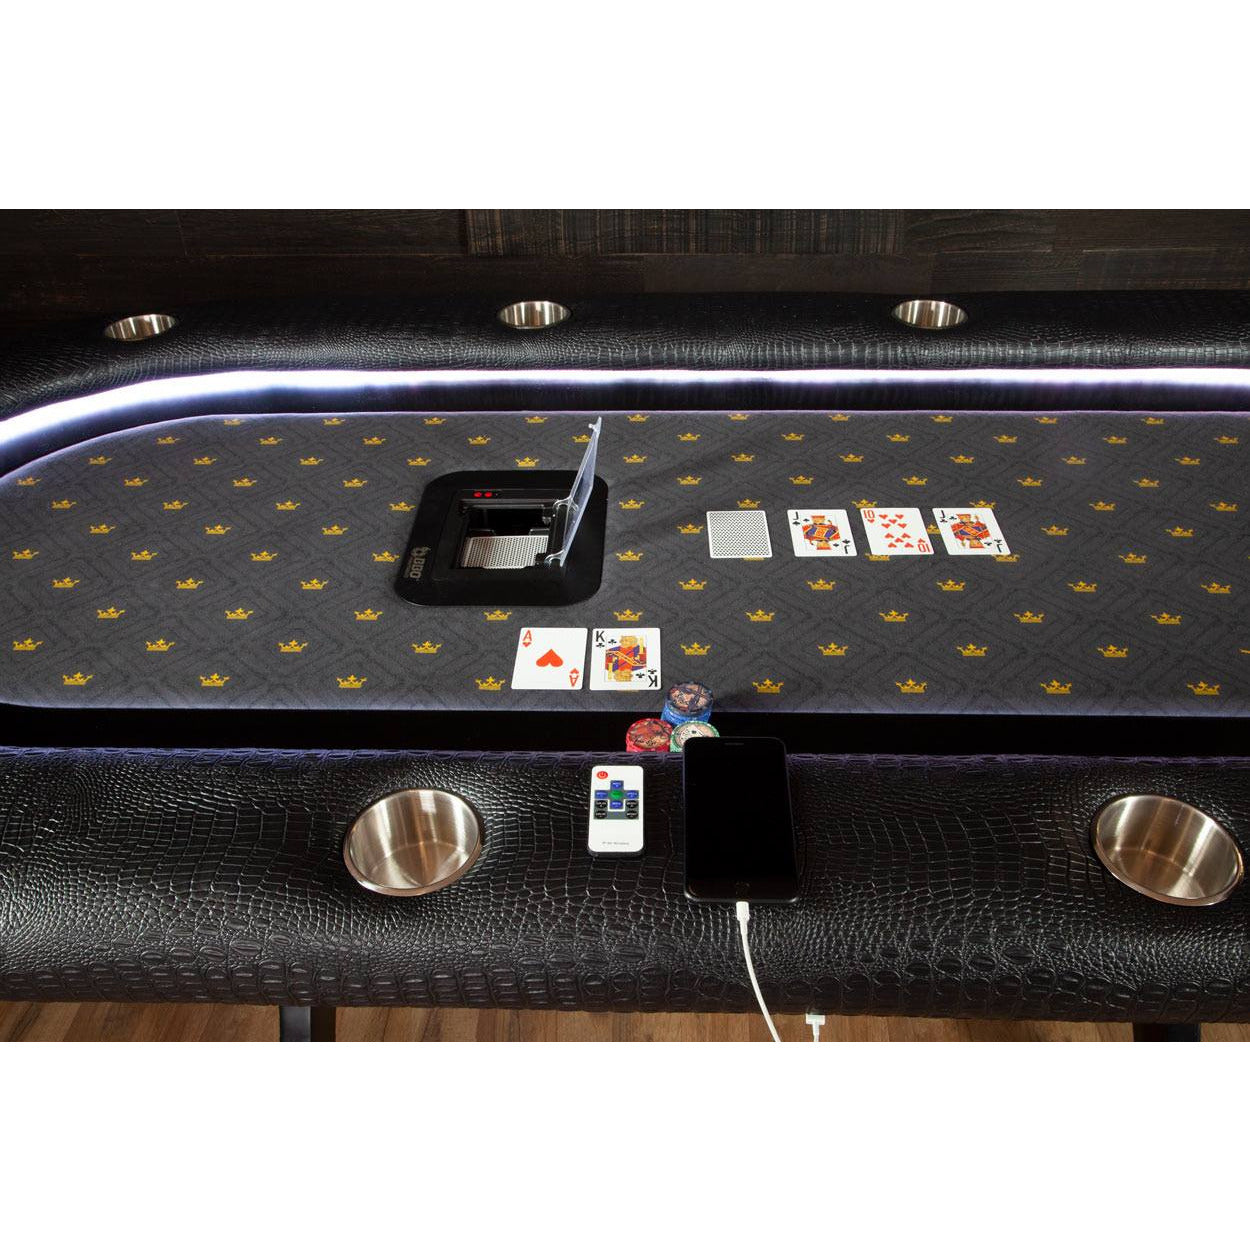 BBO Poker Tables In Table Card Shuffler Installation(SKUBBO-CSIS)